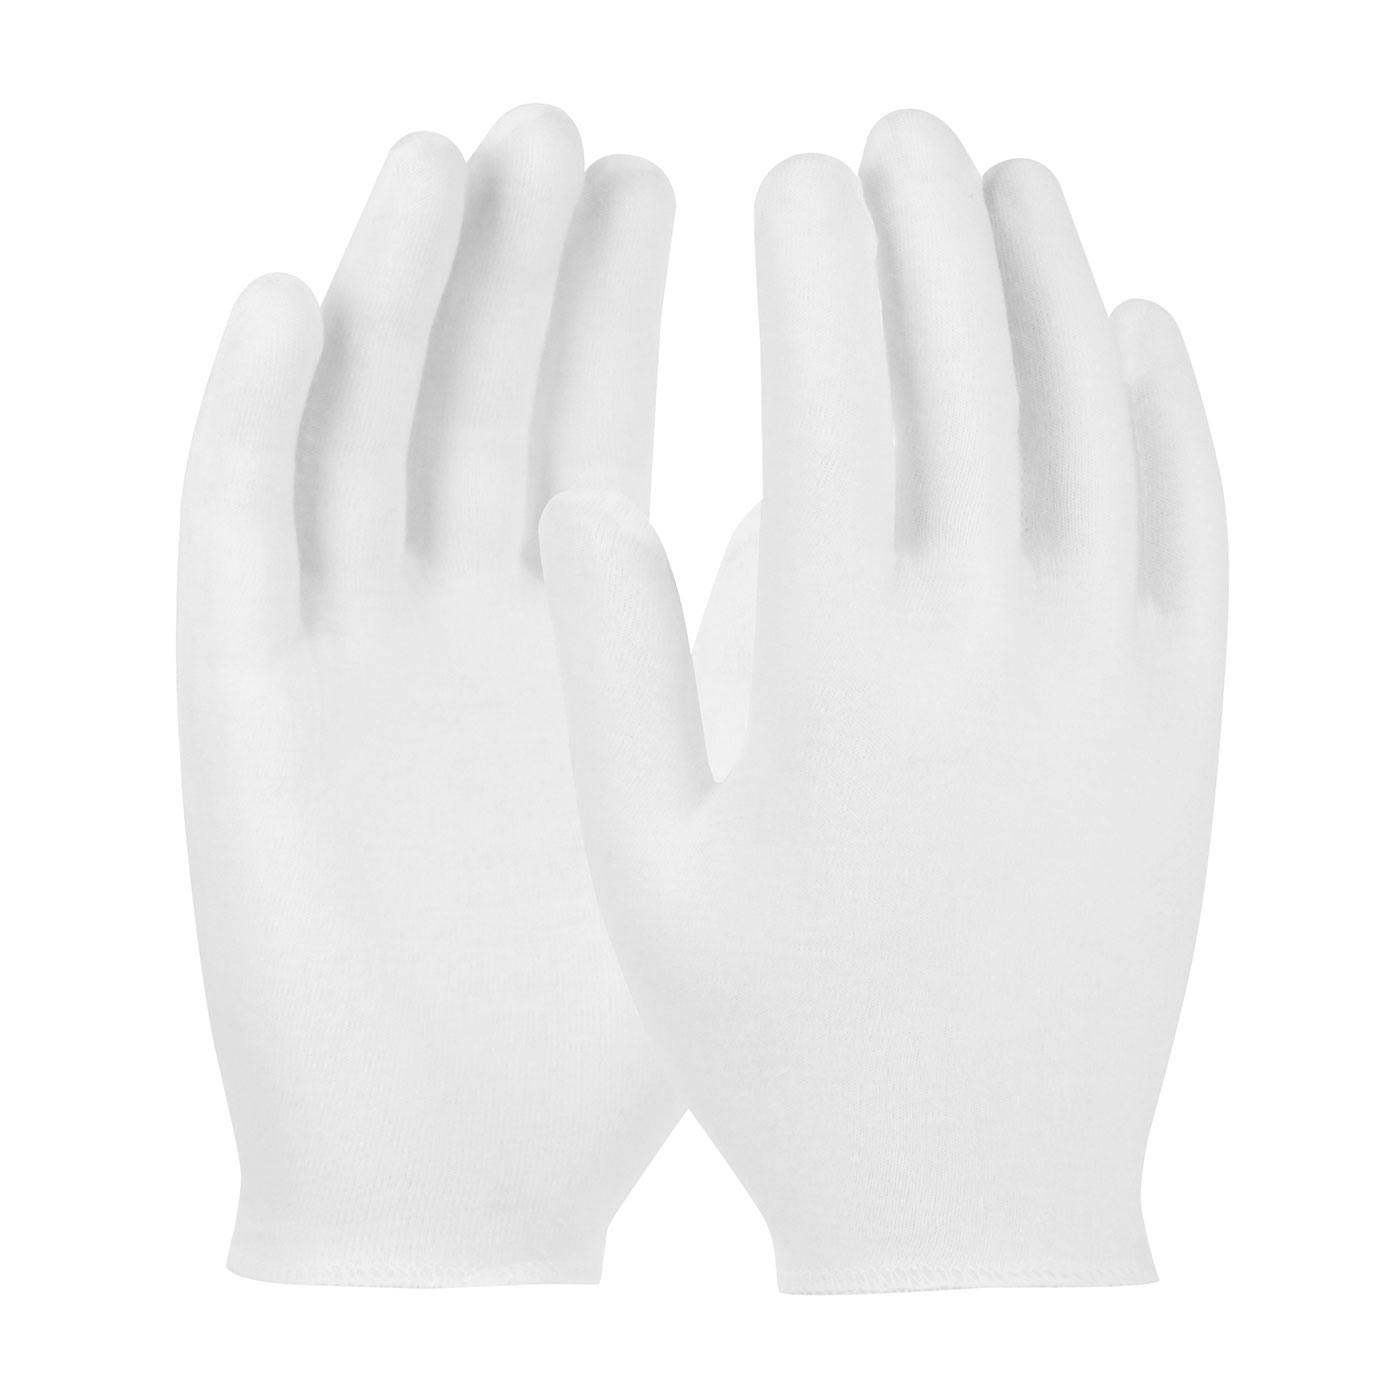 Premium, Light Weight Cotton Lisle Inspection Glove with Overcast Hem Cuff - Ladies', White (97-501H) - LADIES